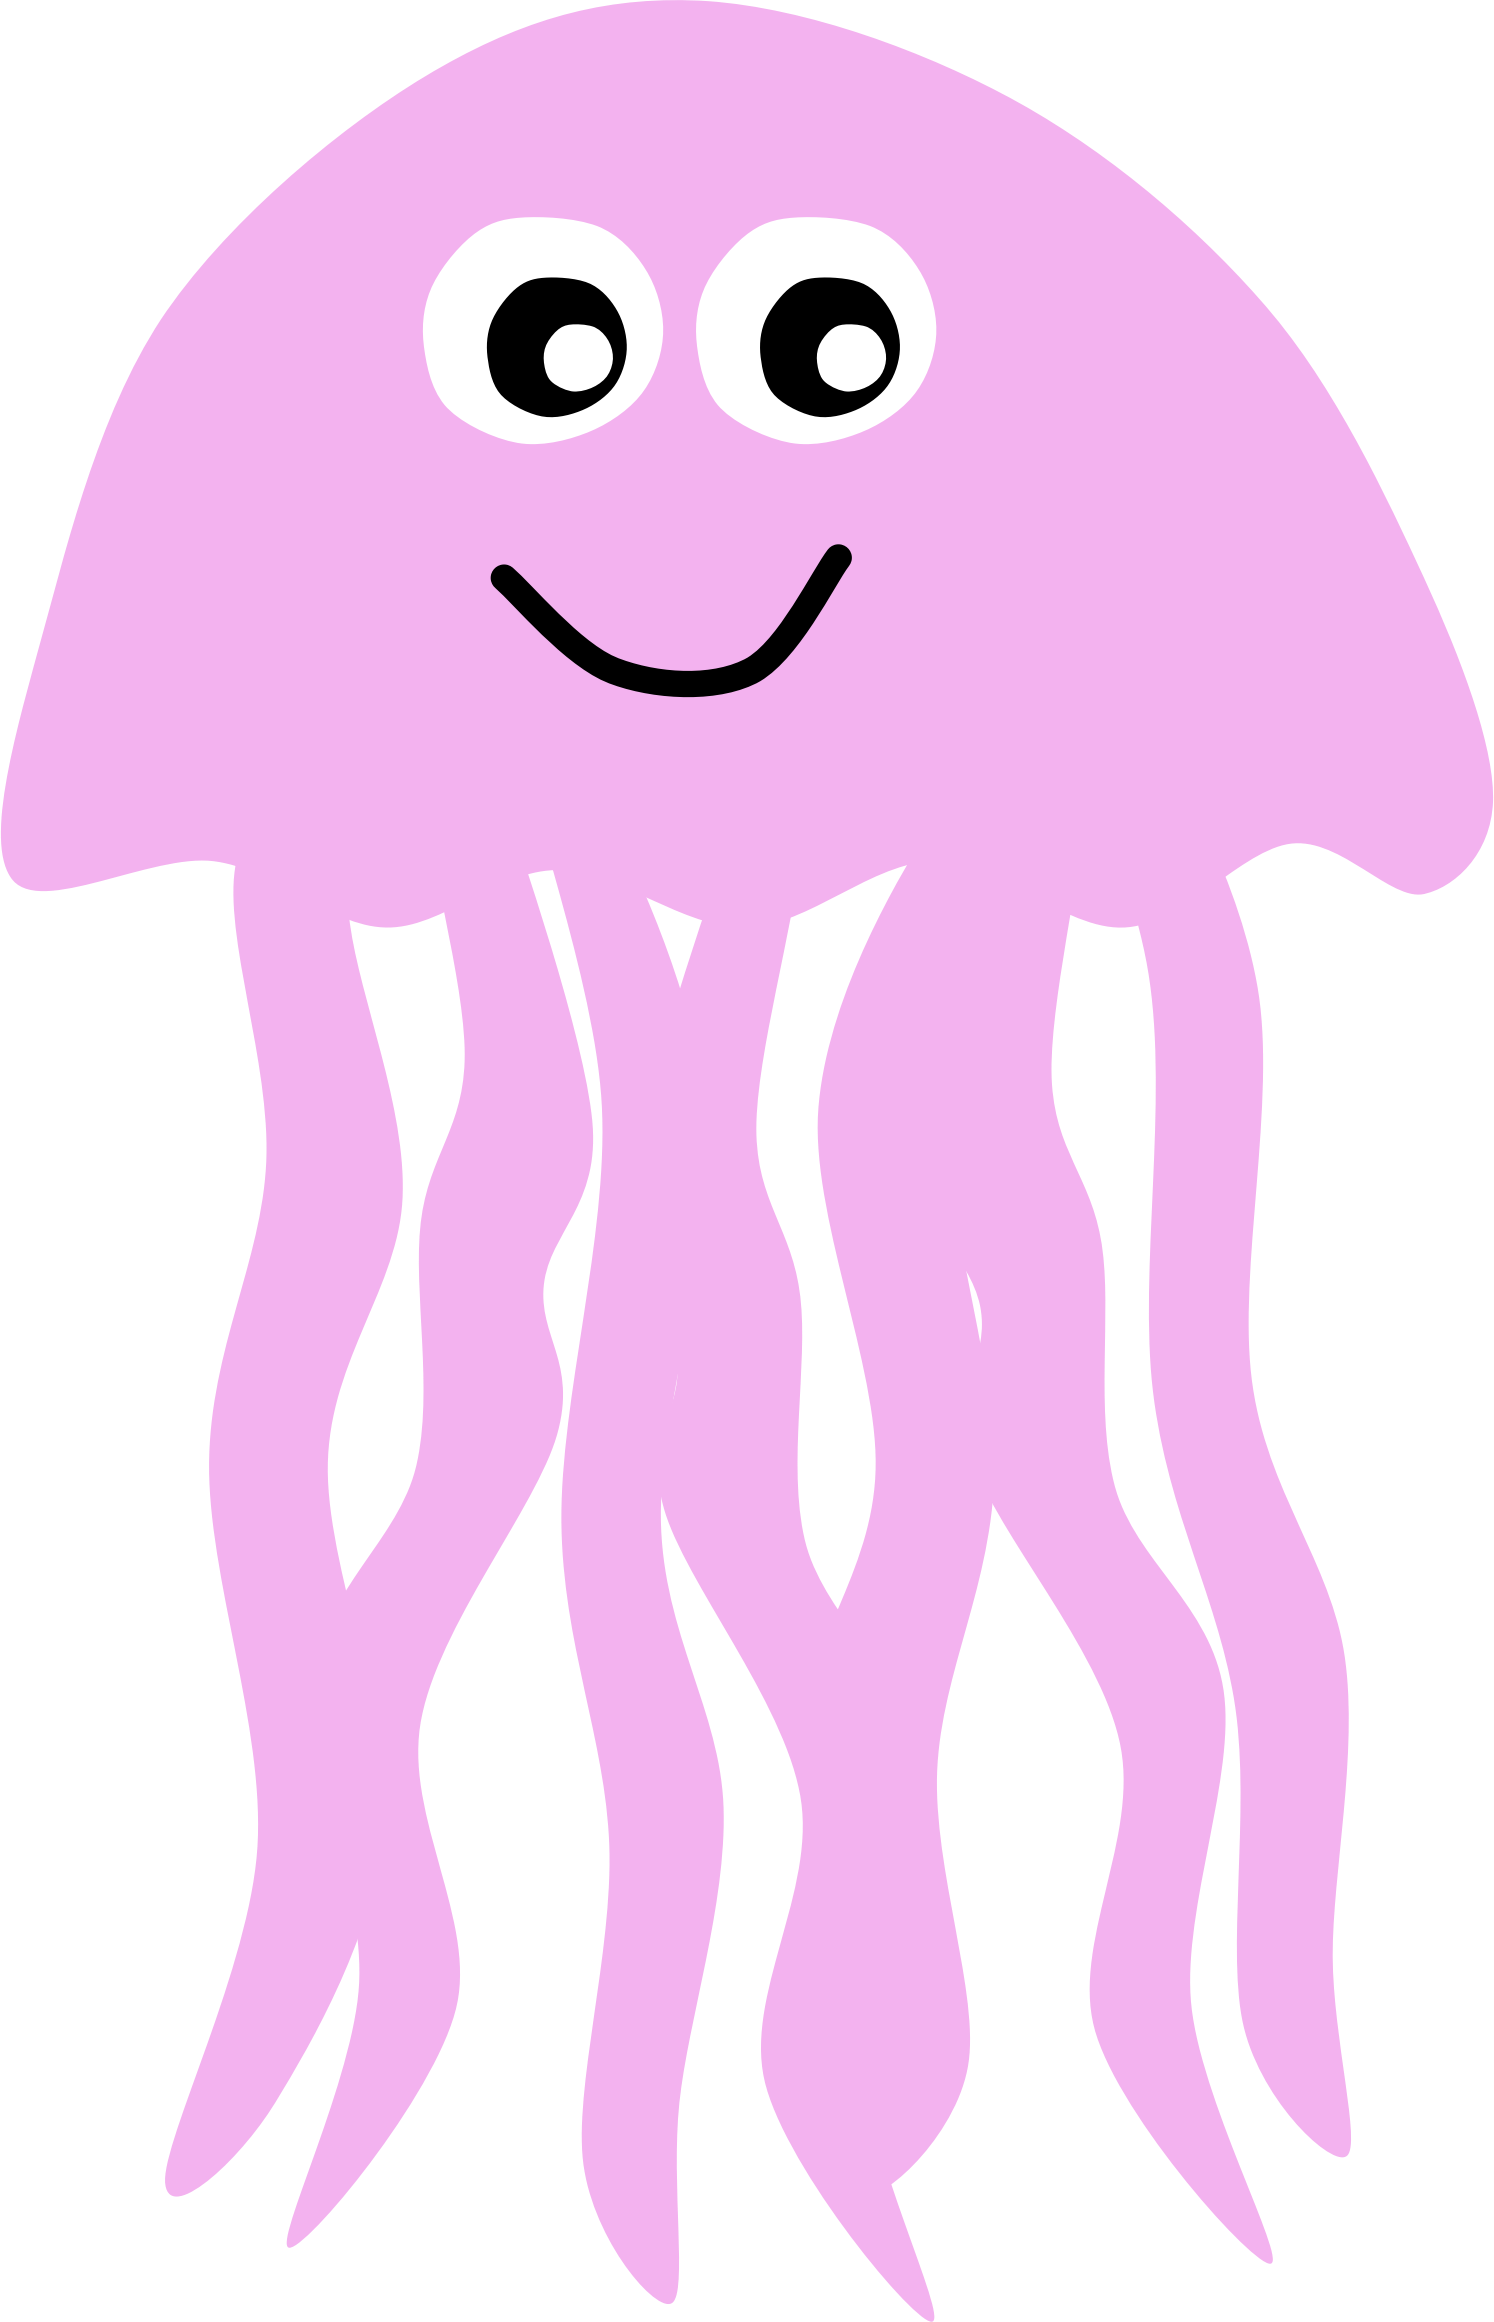 spongebob jellyfish clipart - photo #32